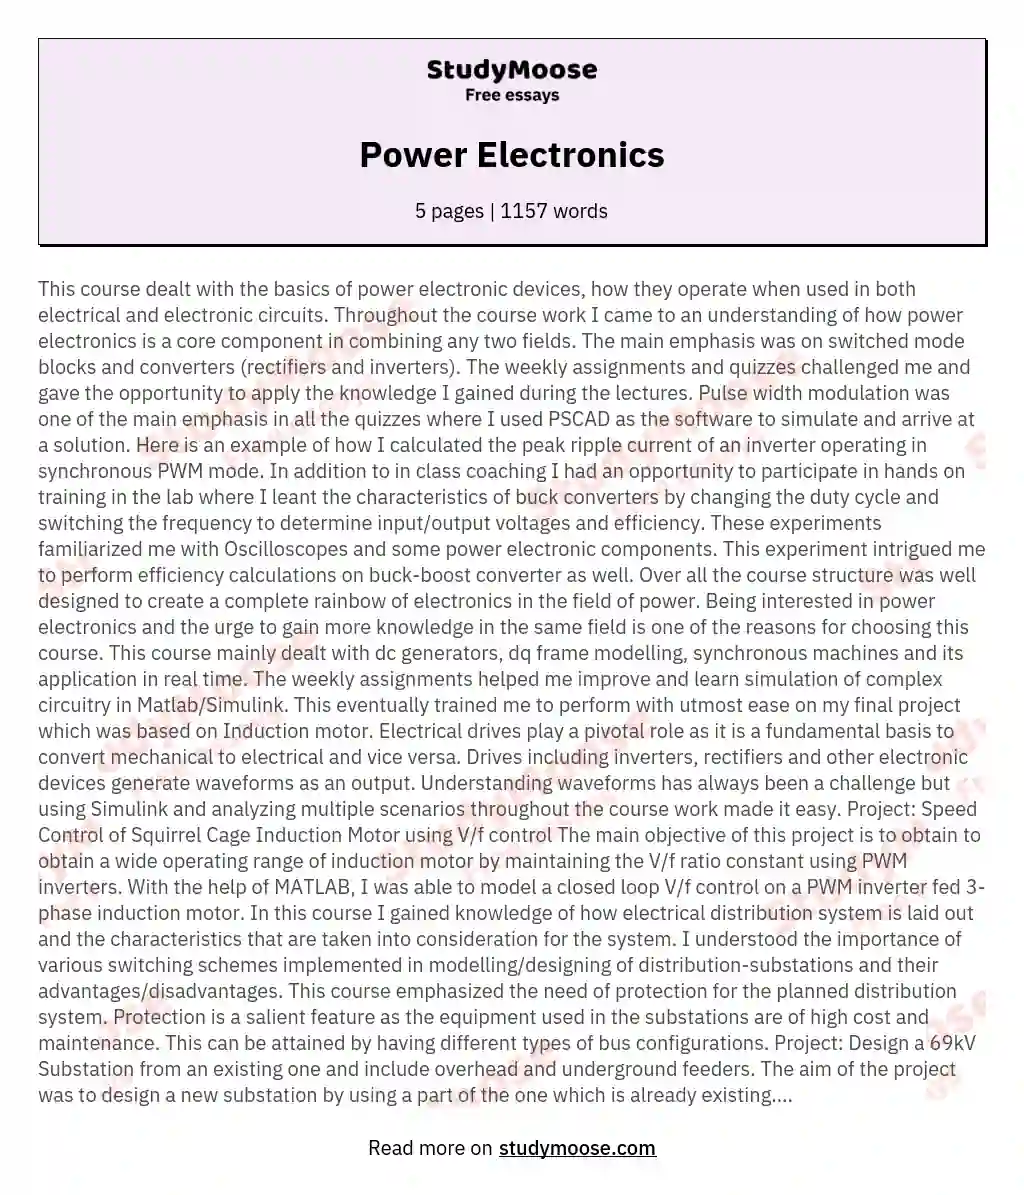 Power Electronics essay